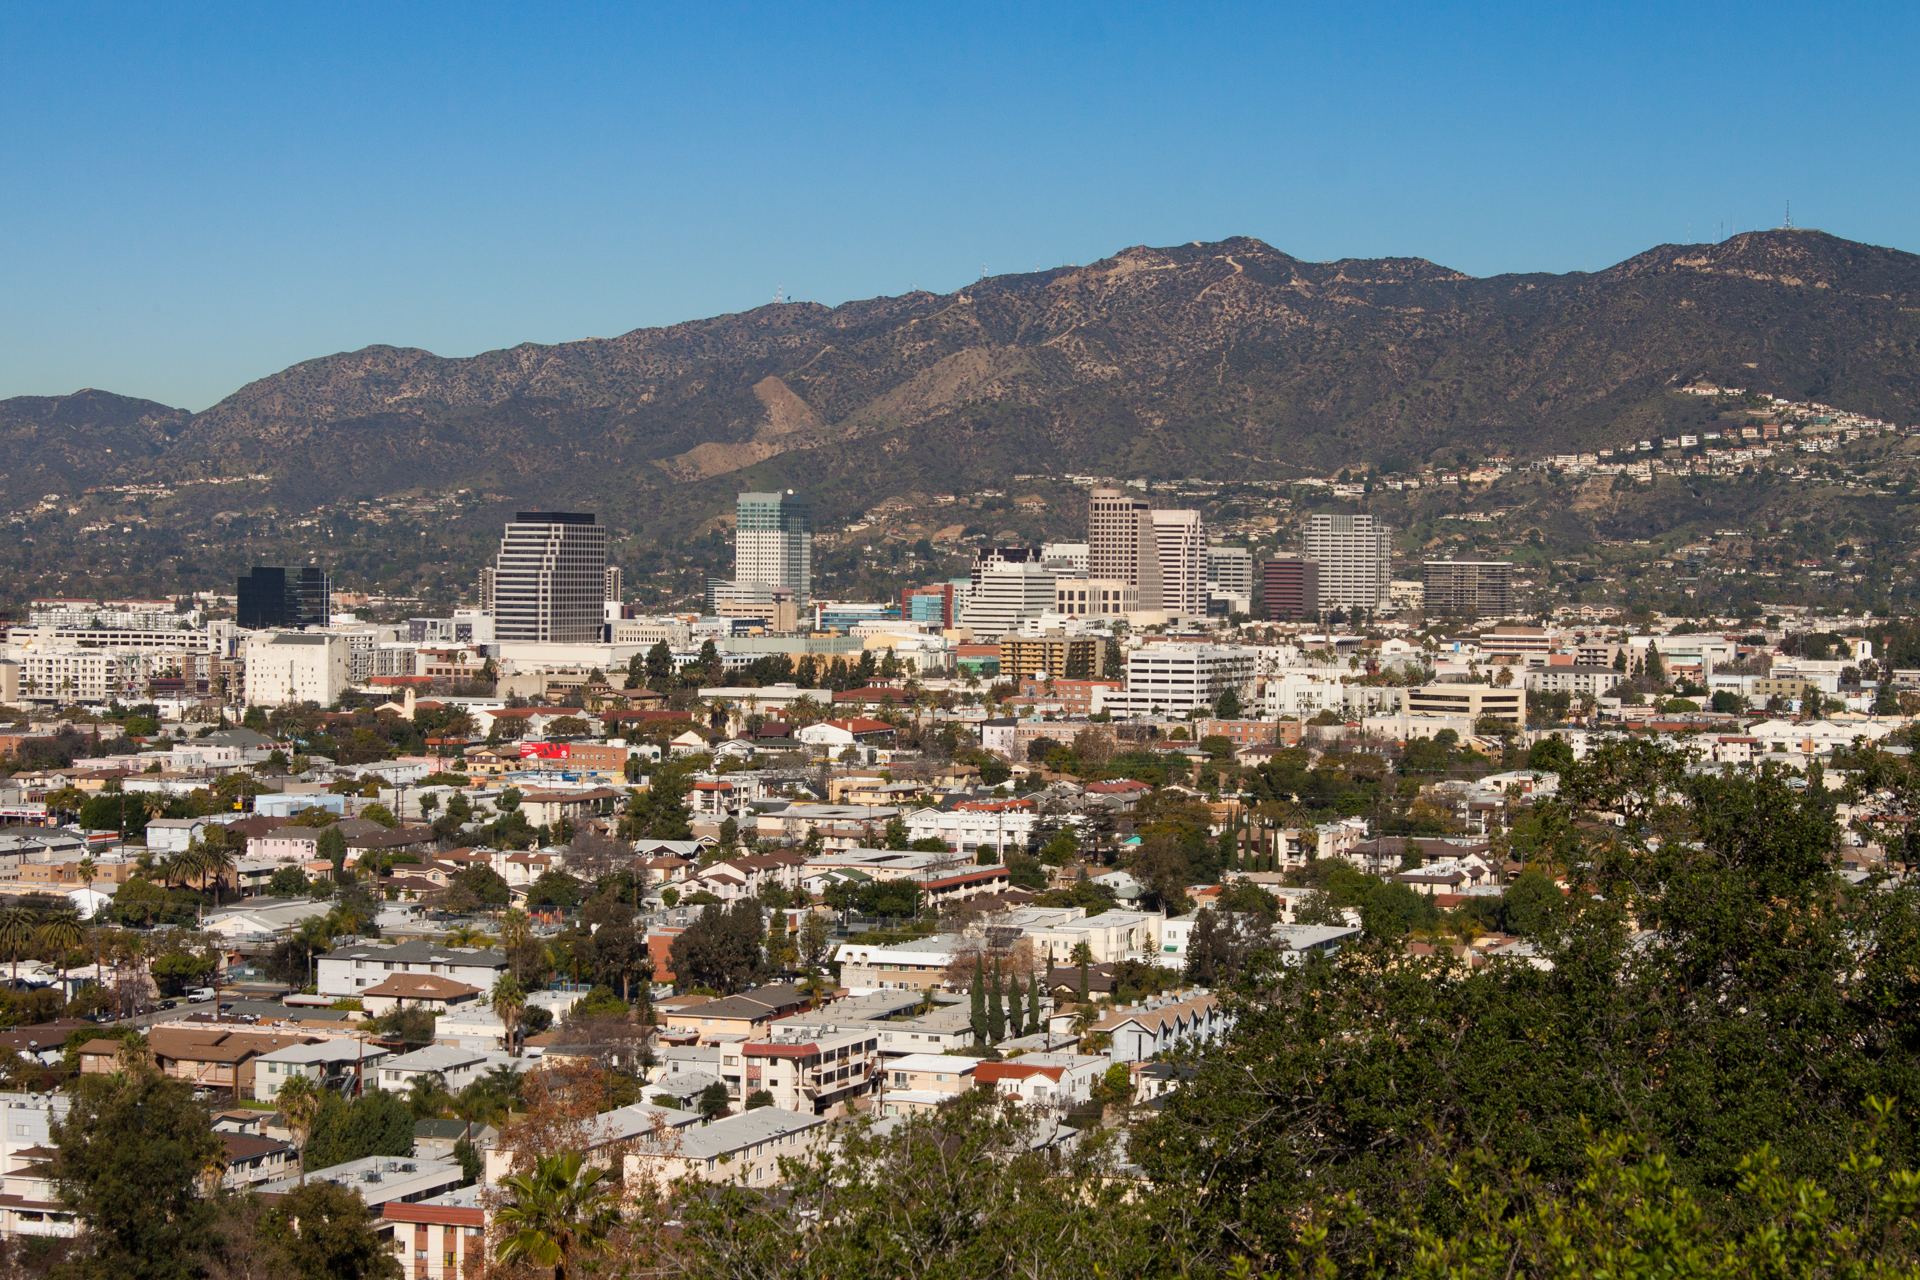 Glendale California Voice Actors Places Media And More Wiki Fandom